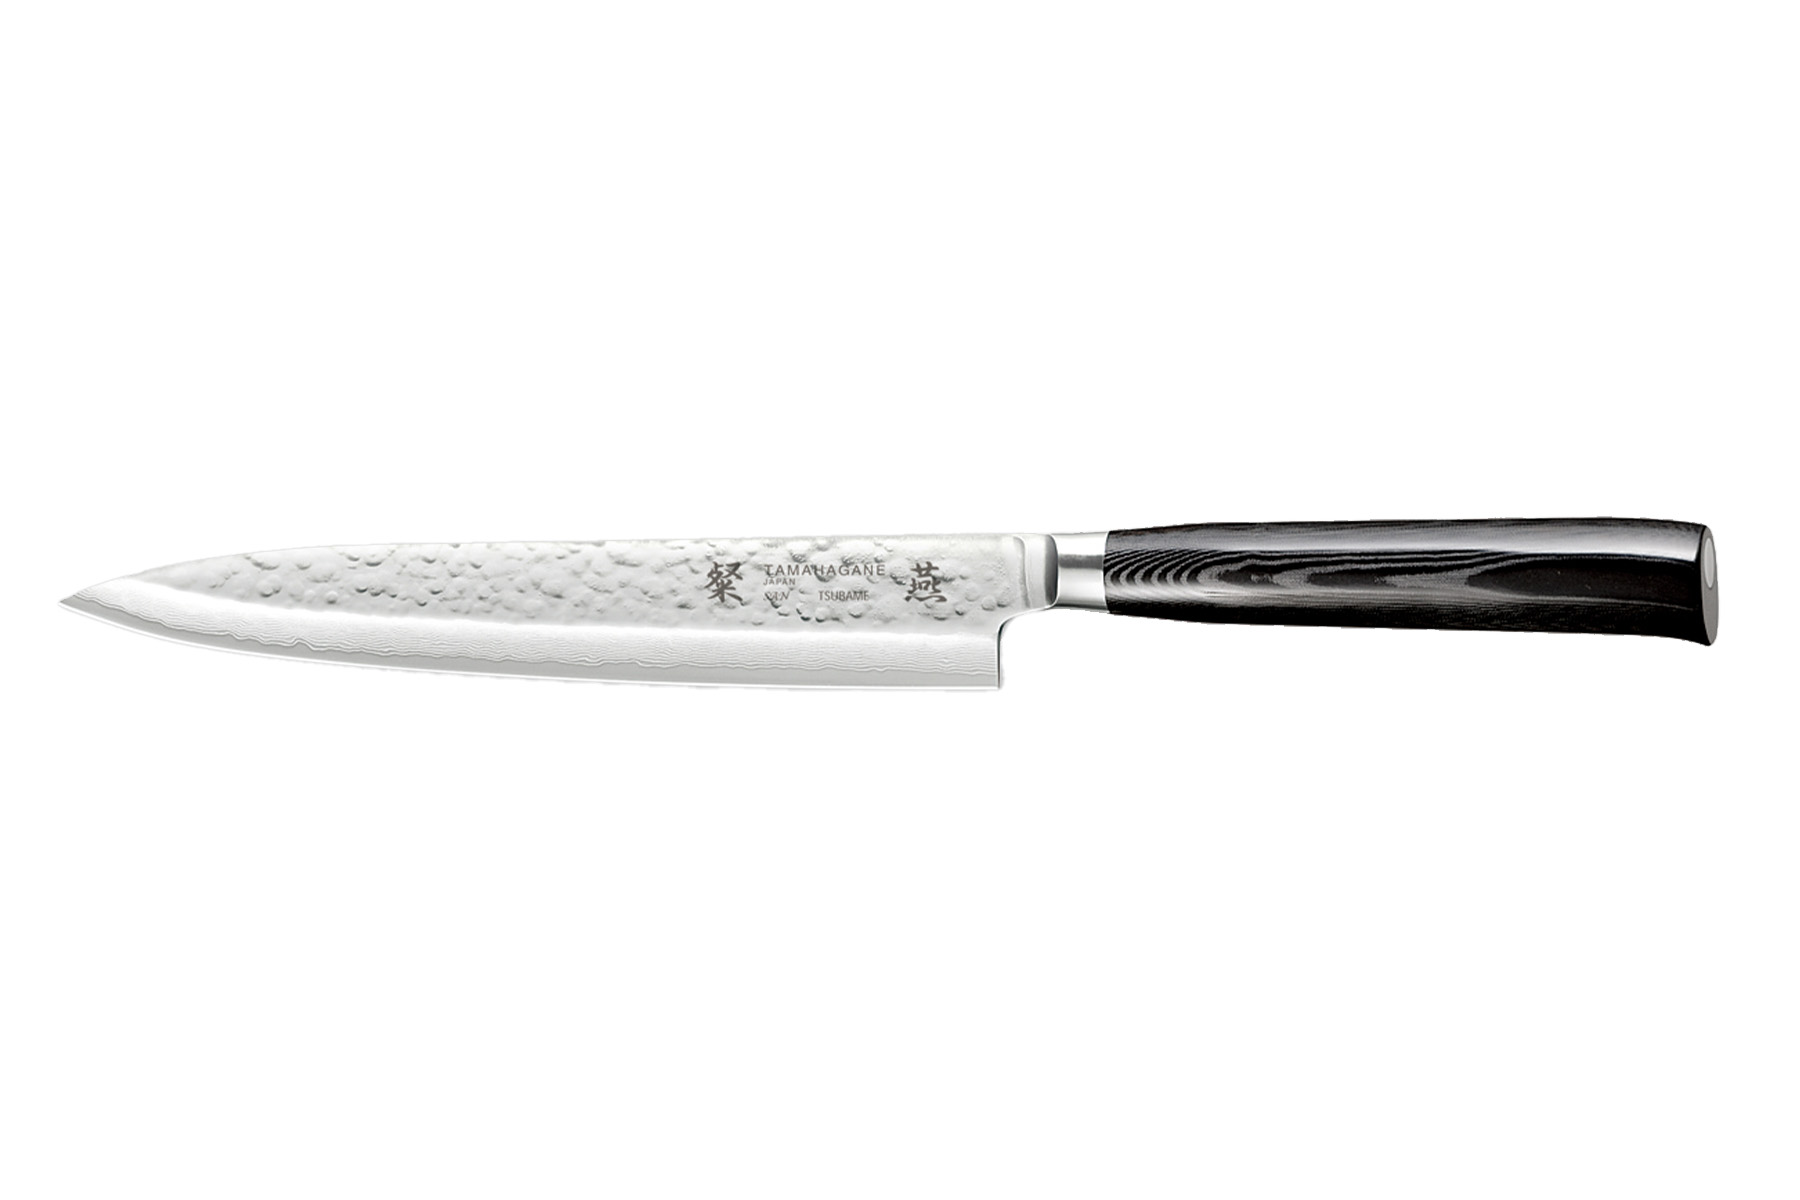 Couteau japonais Tamahagane Tsubame Hammered - Couteau sashimi 21 cm